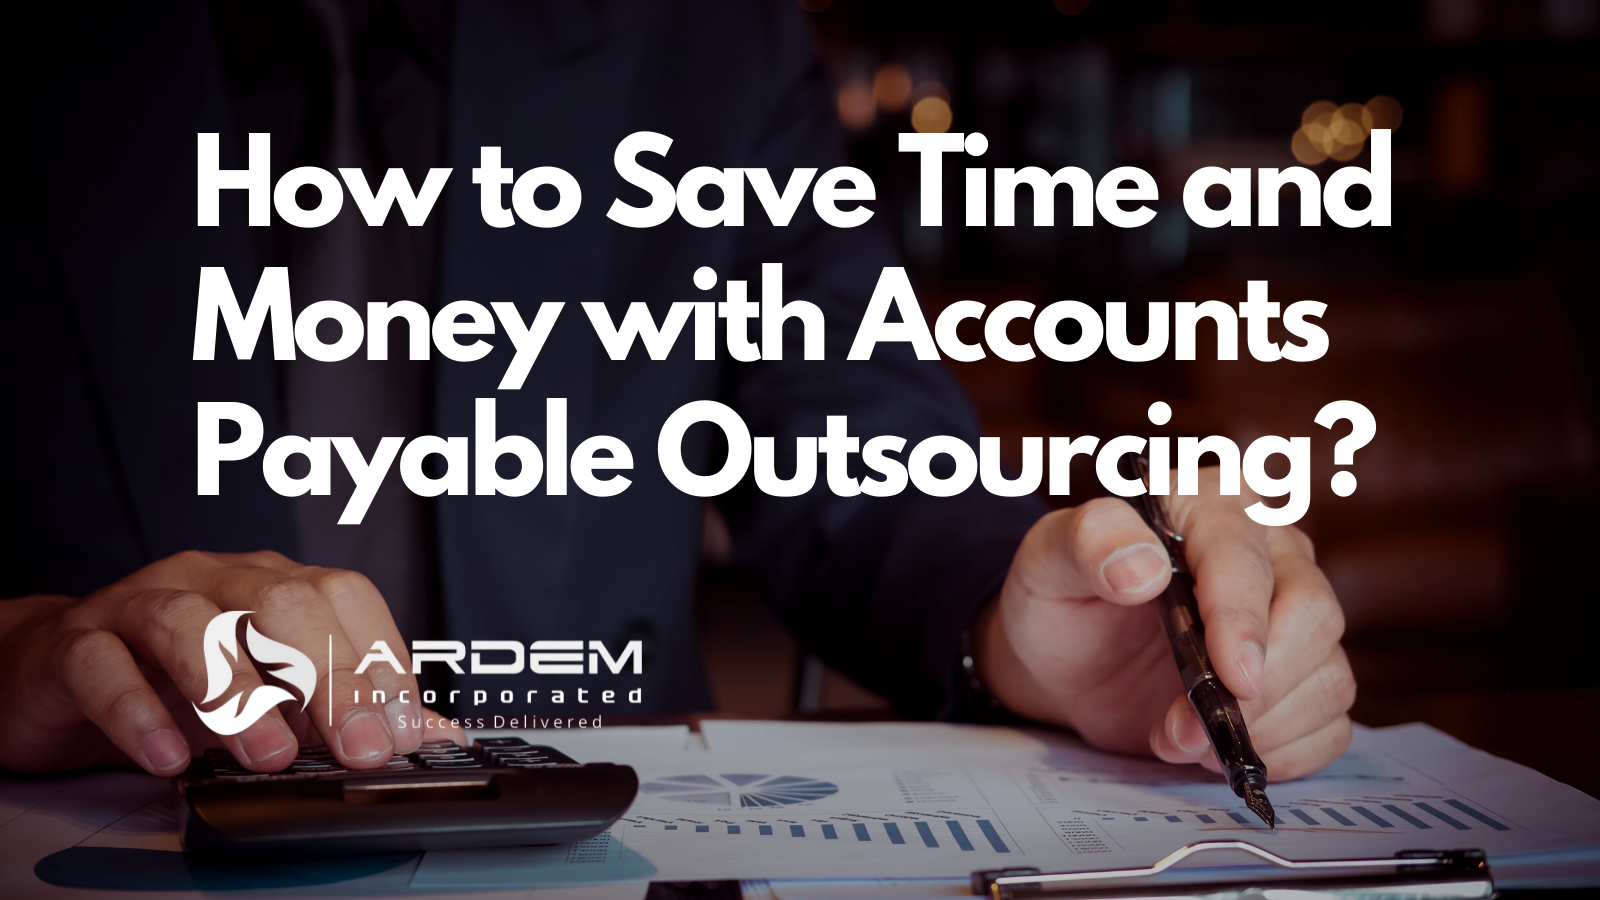 accounts payable outsourcing money save time blog